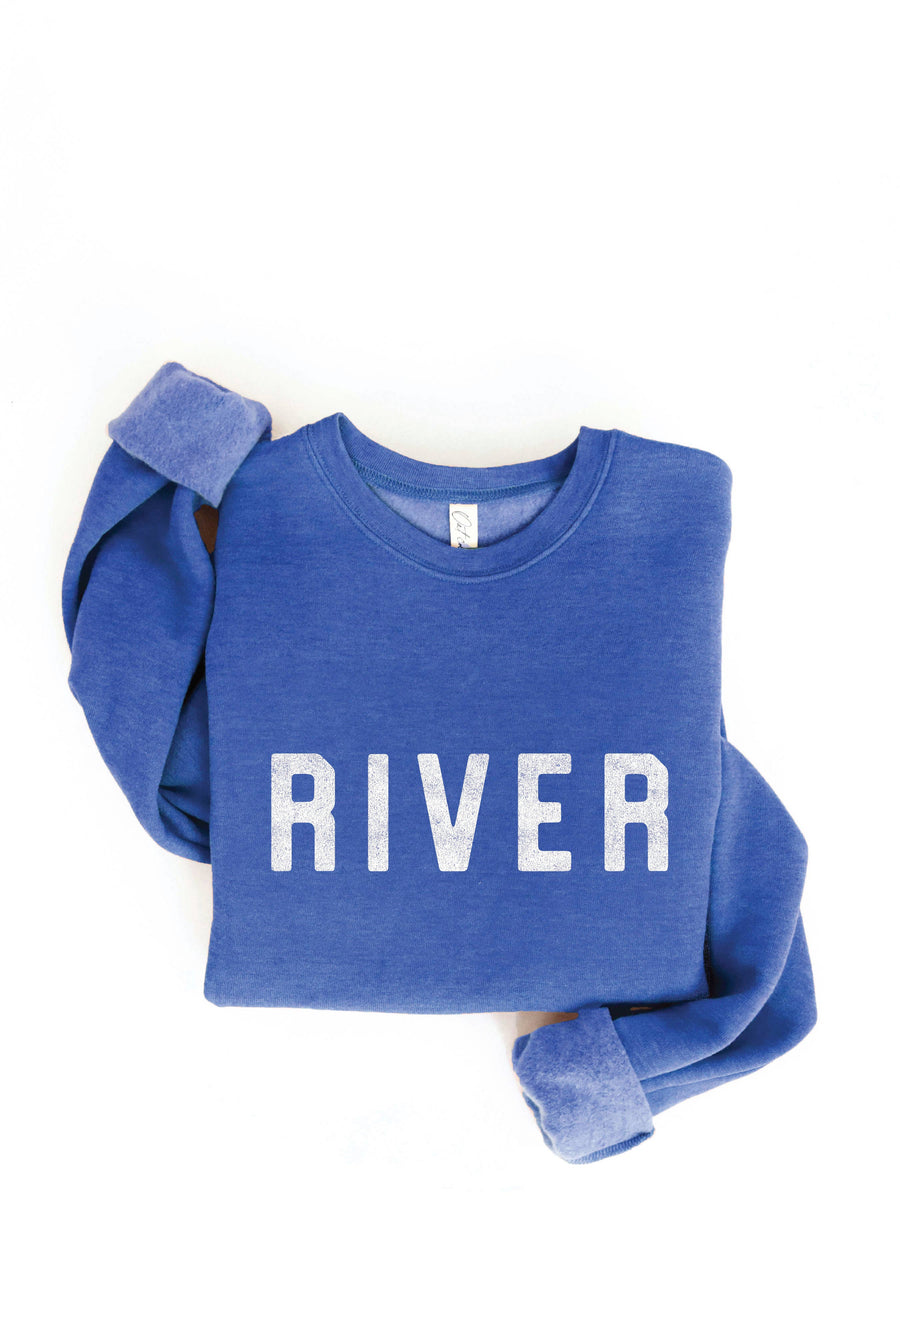 RIVER Graphic Sweatshirt: M